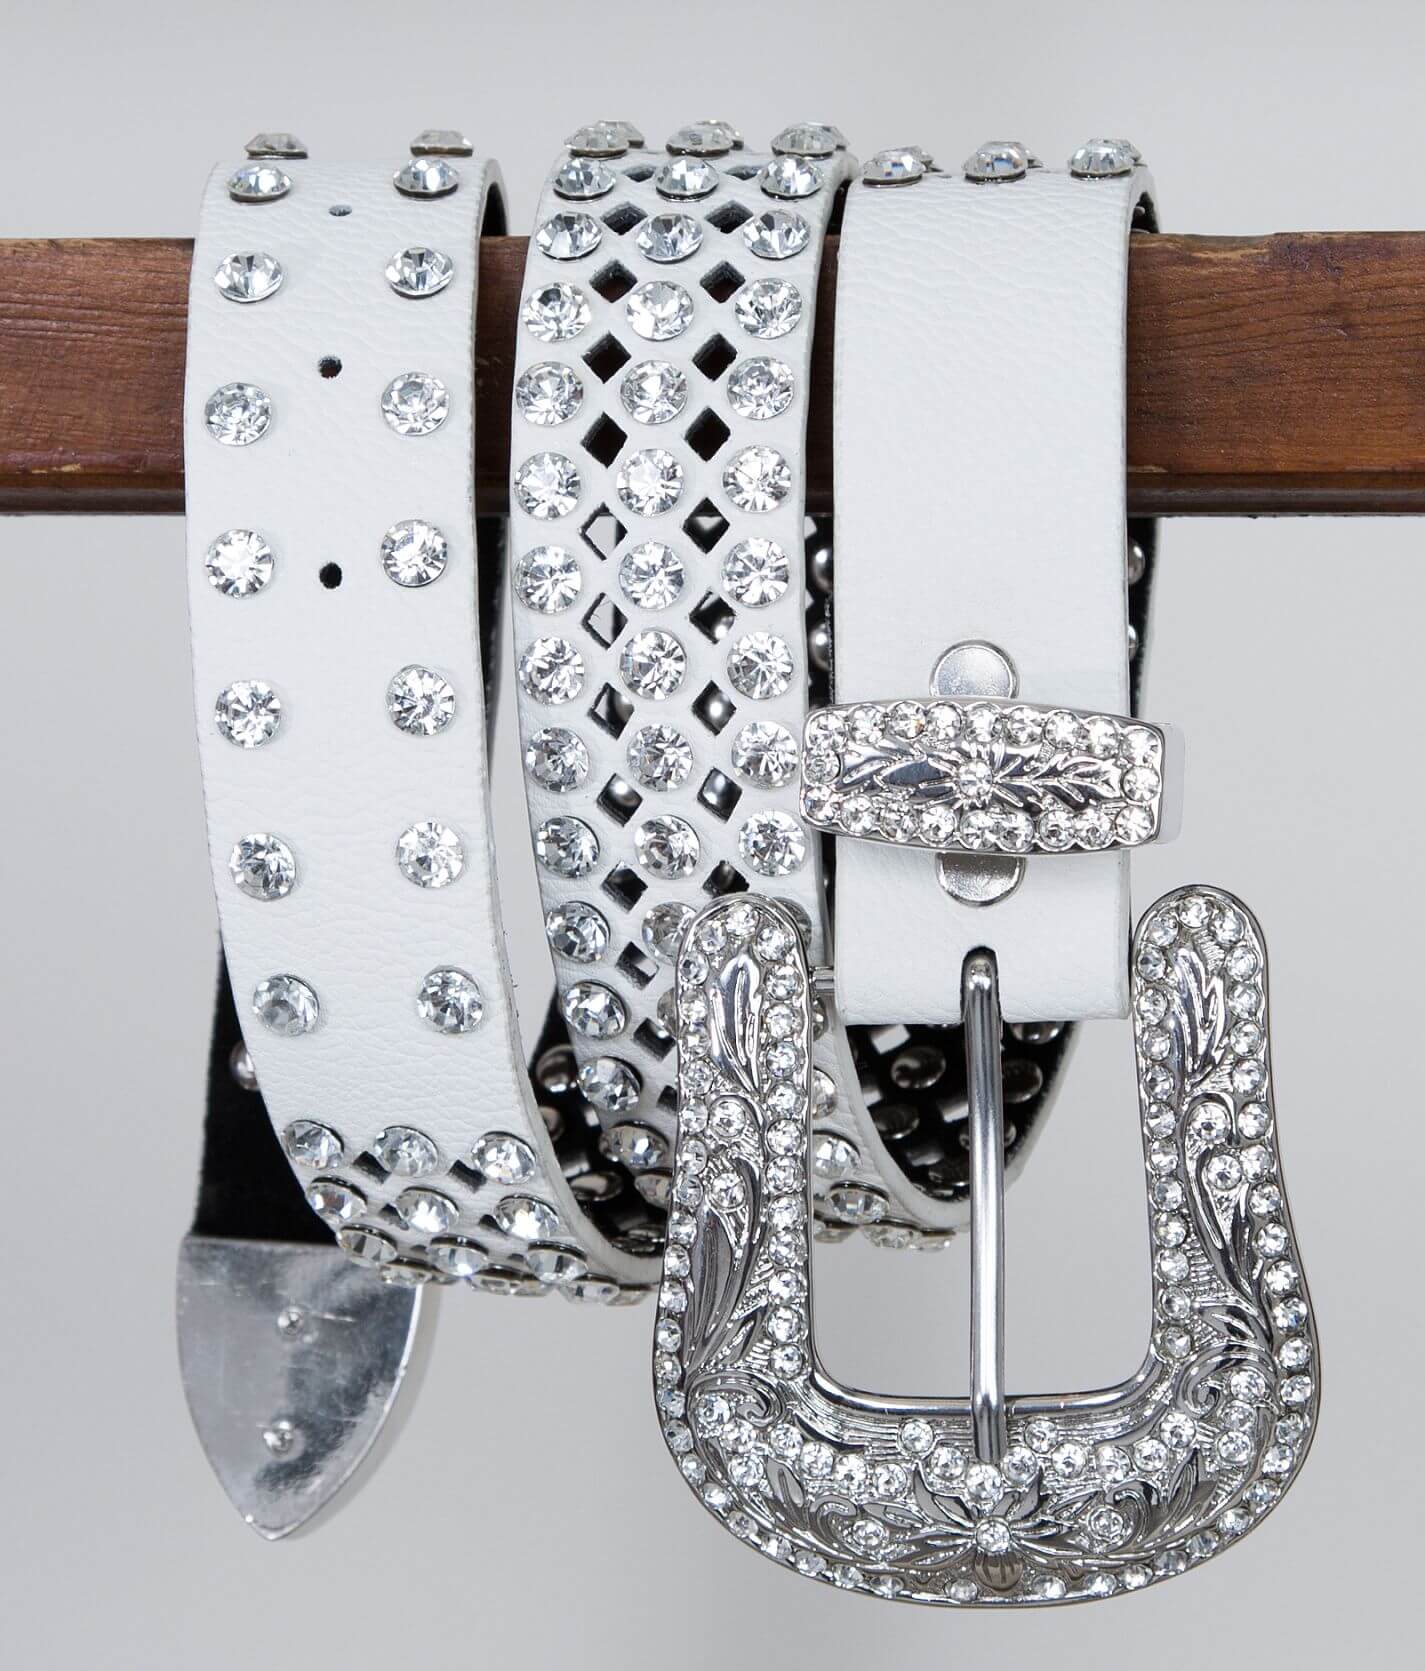 50127 Women Rhinestone Belt Fashion Western Cowgirl Bling Studded Design  Cross Concho Leather Belt 1-1/2(38mm) wide-White